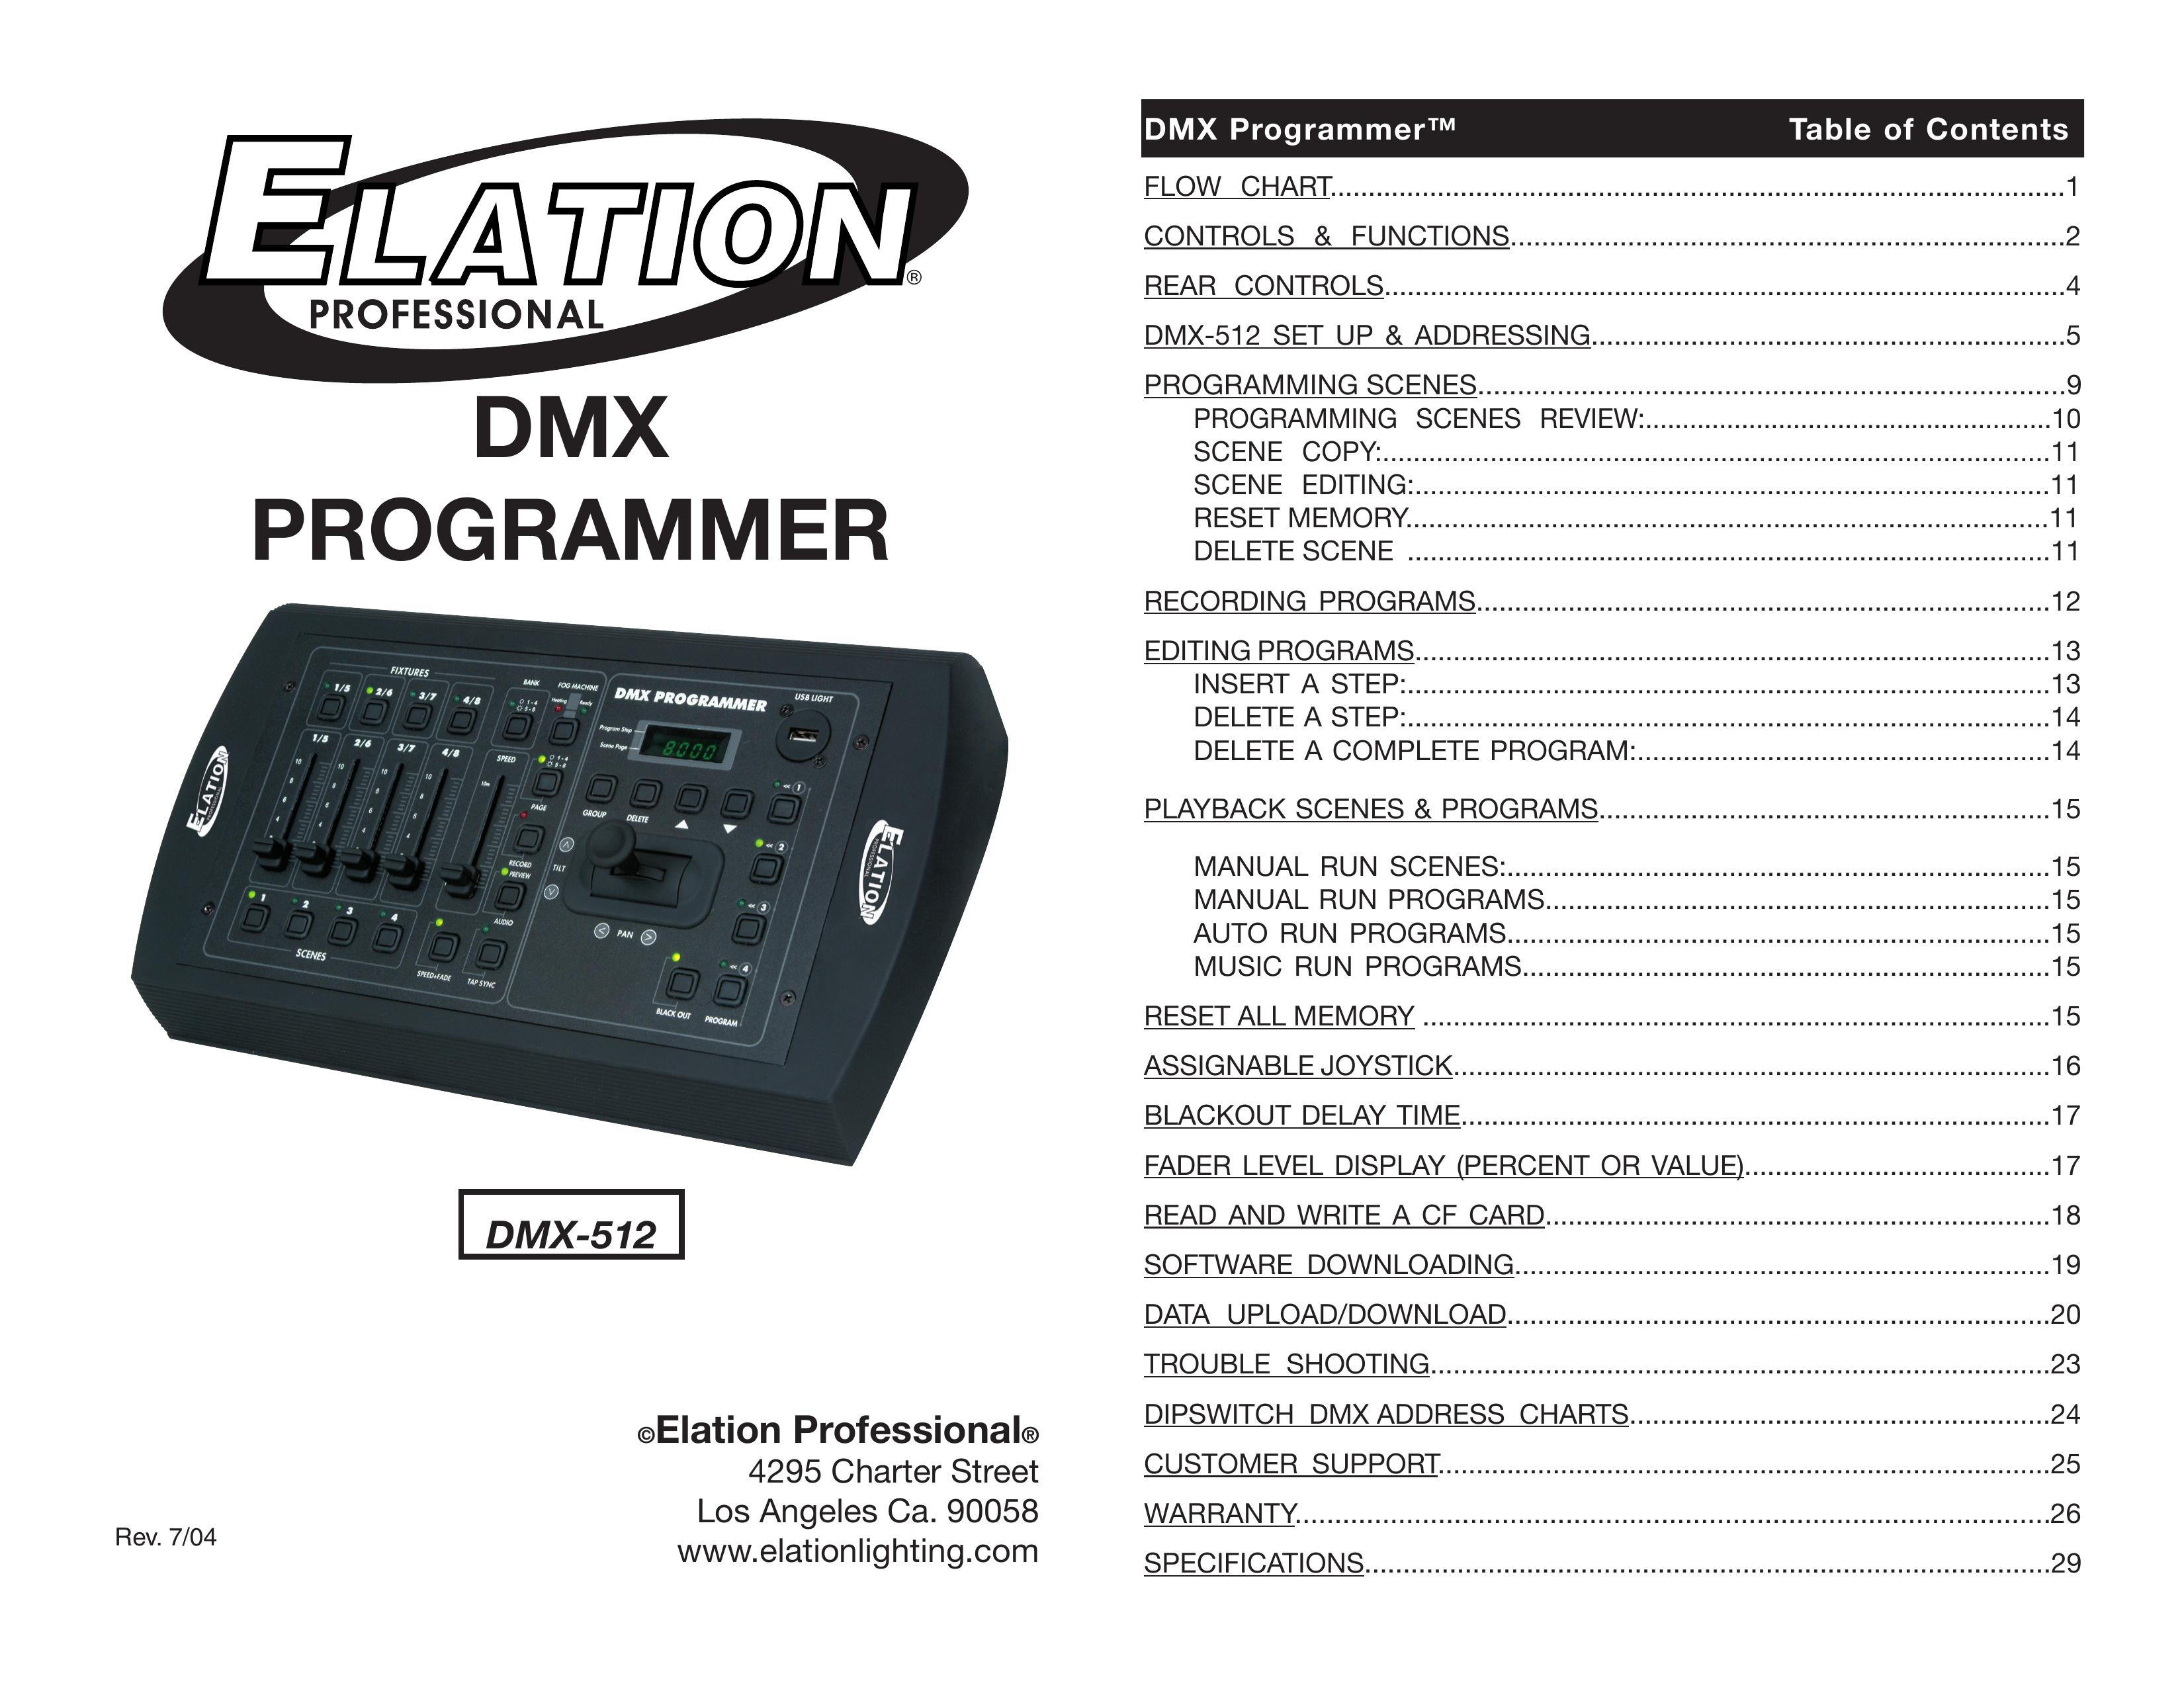 Elation Professional DMX-512 DJ Equipment User Manual